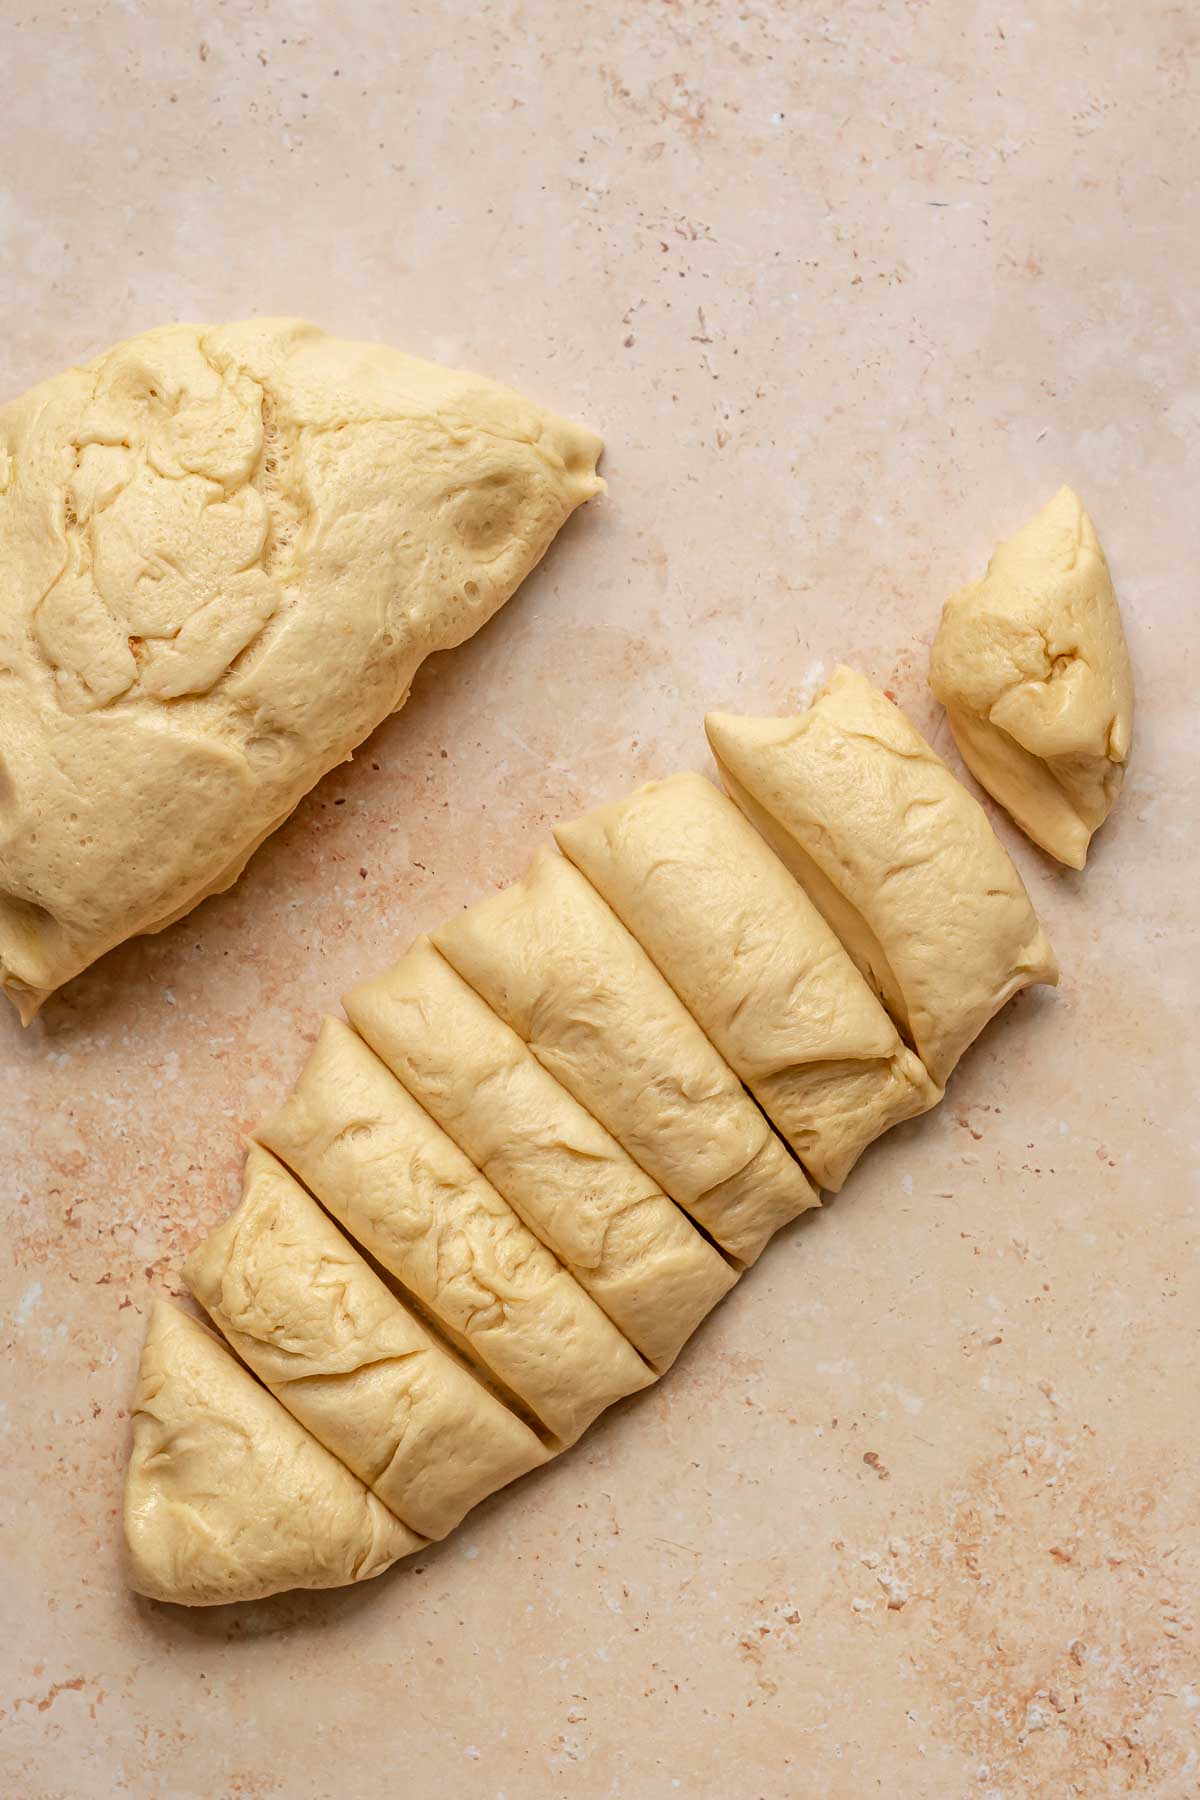 Brioche dough separated on a counter.